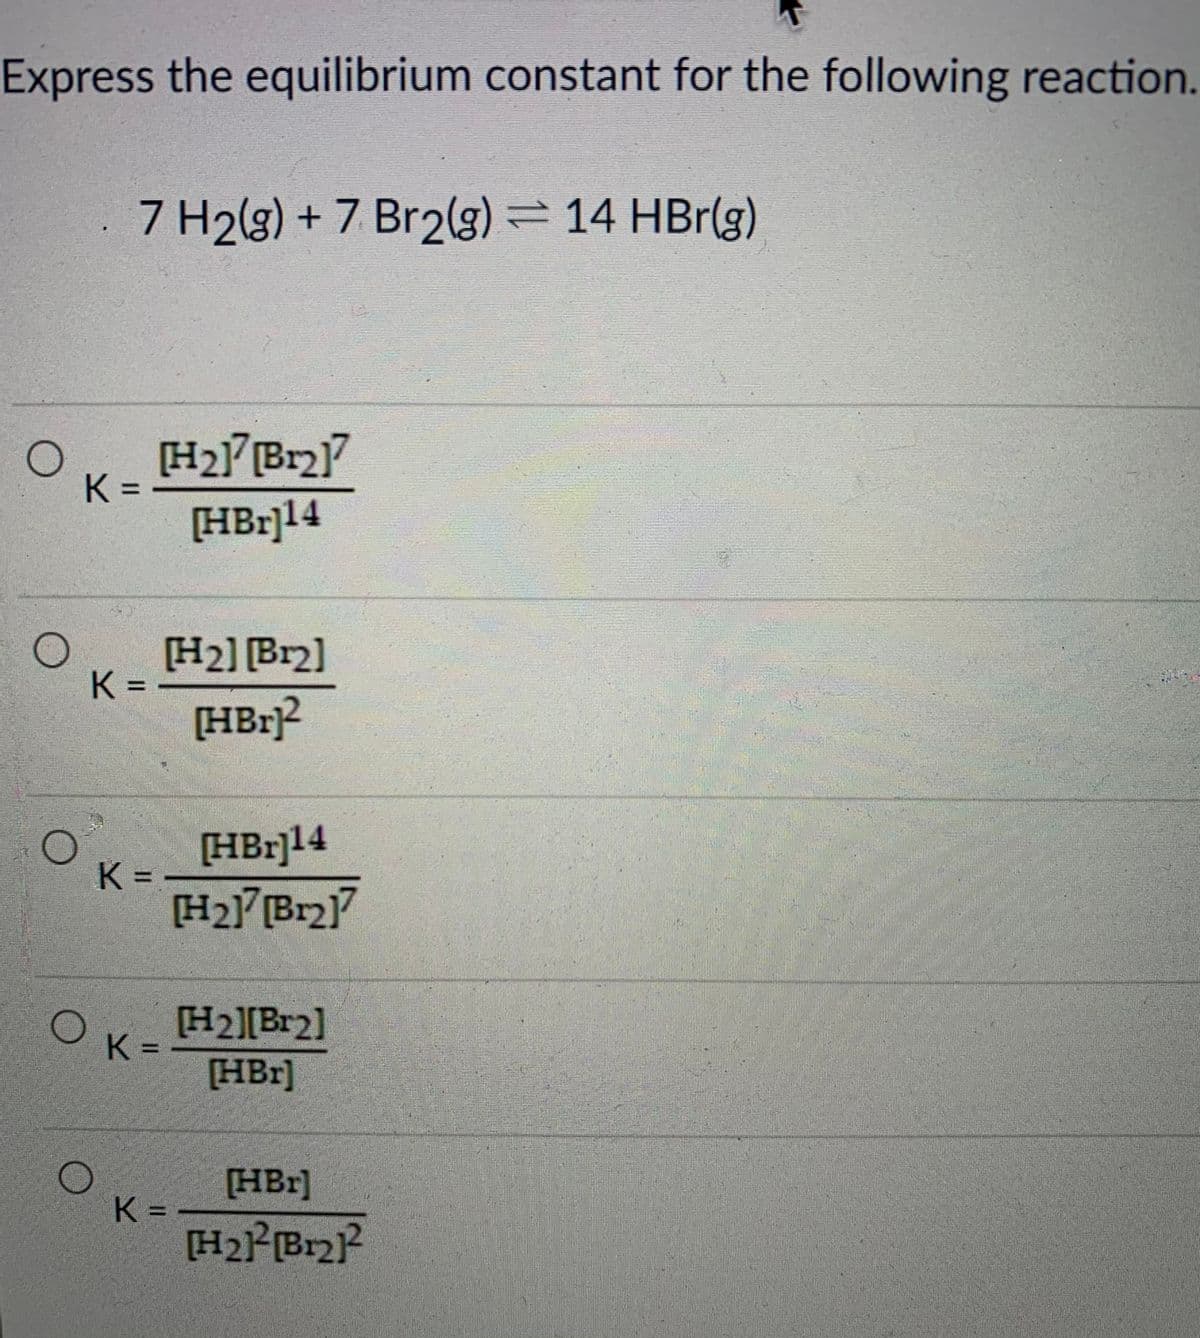 Express the equilibrium constant for the following reaction.
7 H2(g) + 7 Br2g)
)= 14 HBr(g)
K =
[HBr]14
[H2] [Br2]
K =
[HBr]?
[HBr]14
K =
H2Br]
[H2][Br2]
K =
[HBr]
[HBr]
K =
